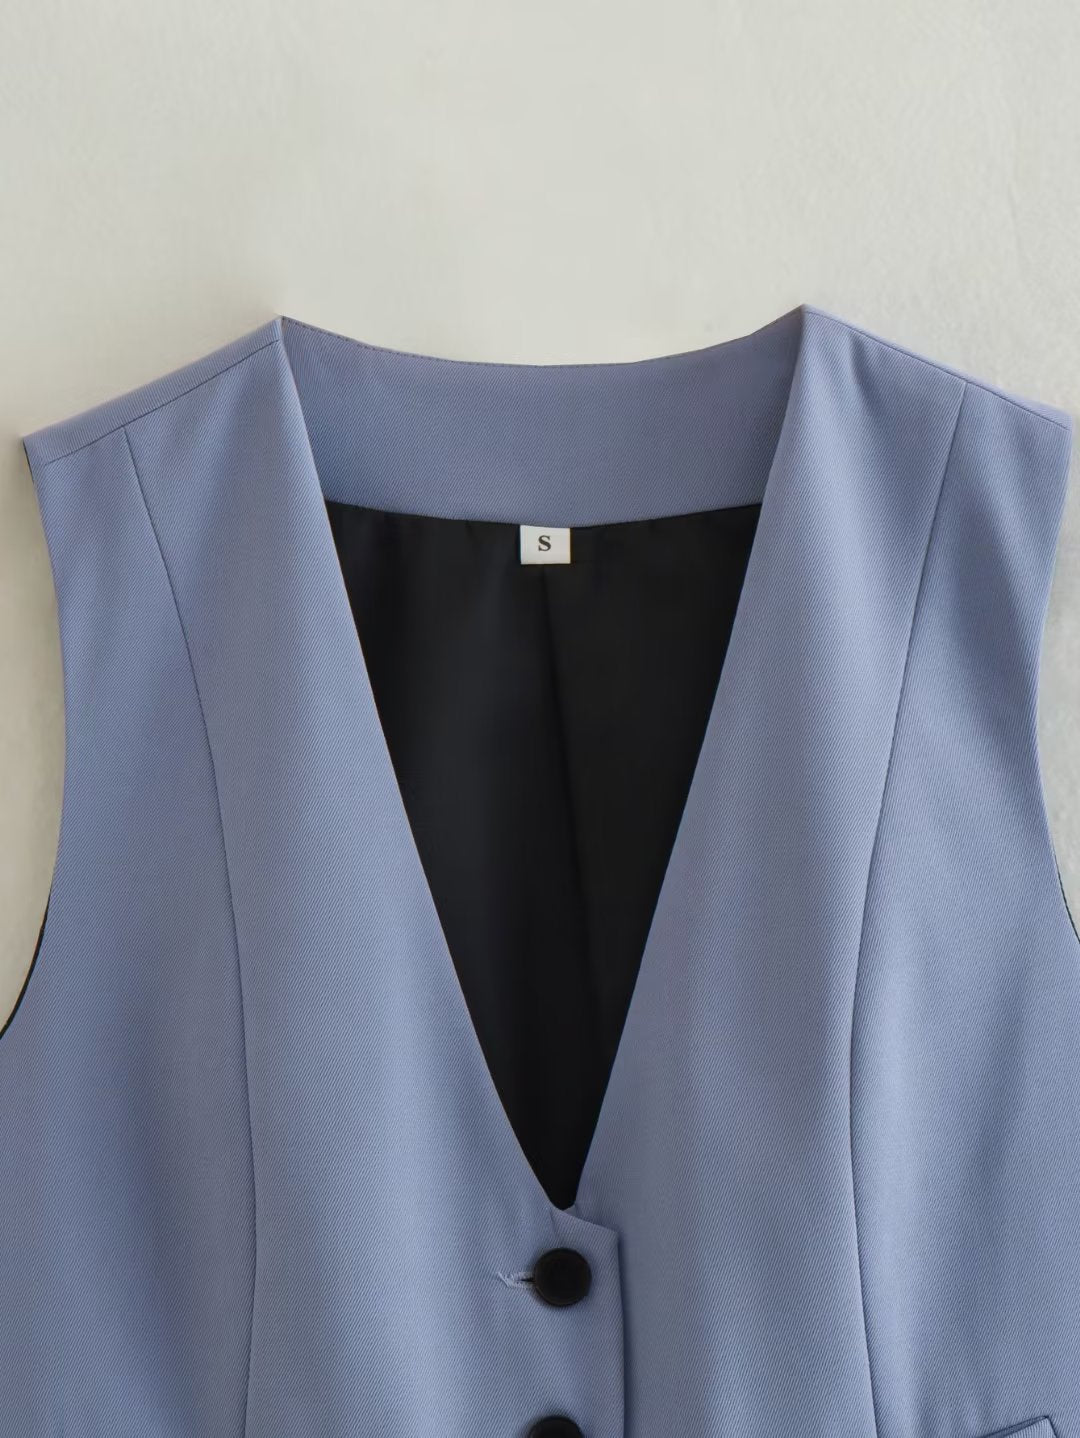 Women Clothing French Casual V neck Sleeveless Vest Short Vest